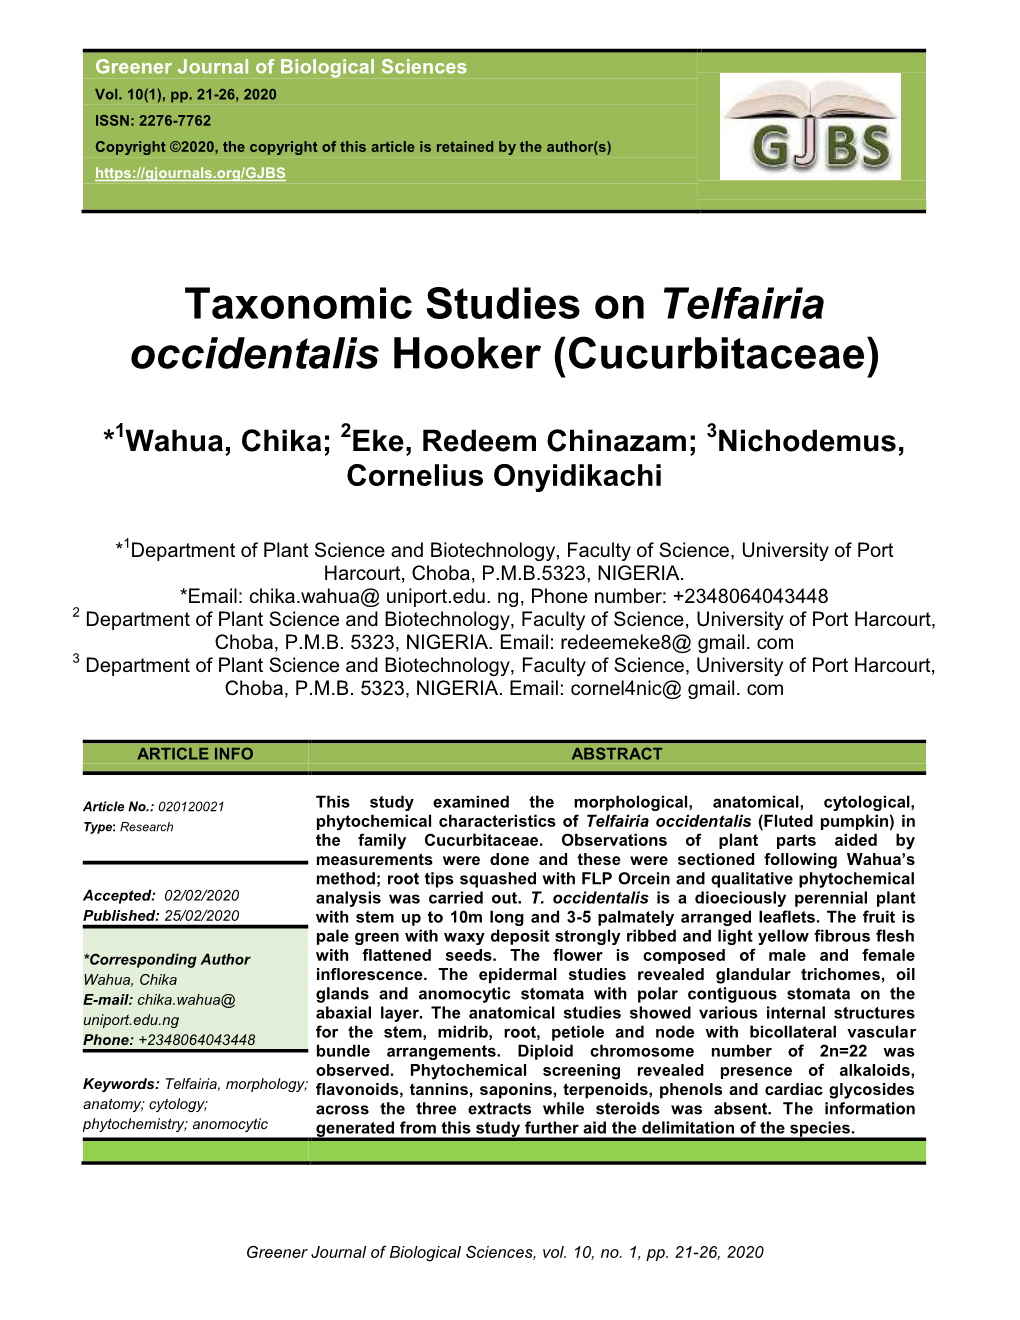 Taxonomic Studies on Telfairia Occidentalis Hooker (Cucurbitaceae)